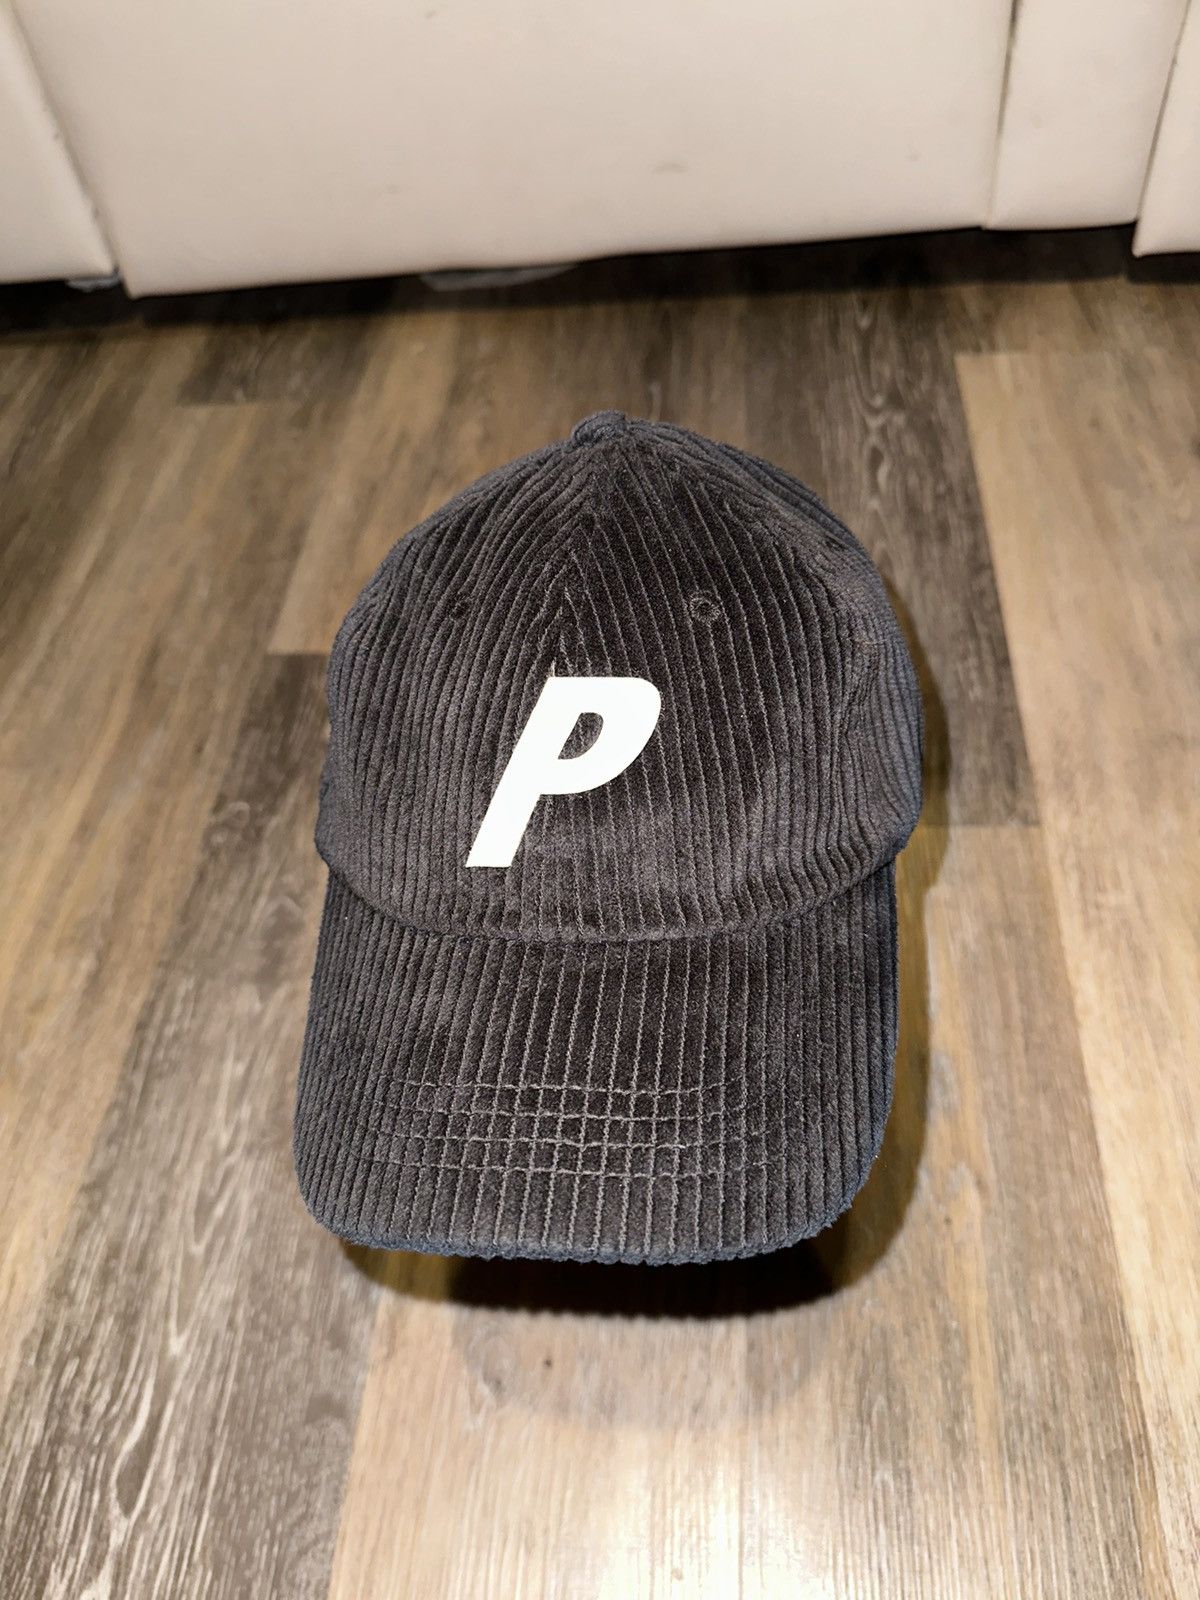 Palace Palace Goretex P logo corduroy hat | Grailed